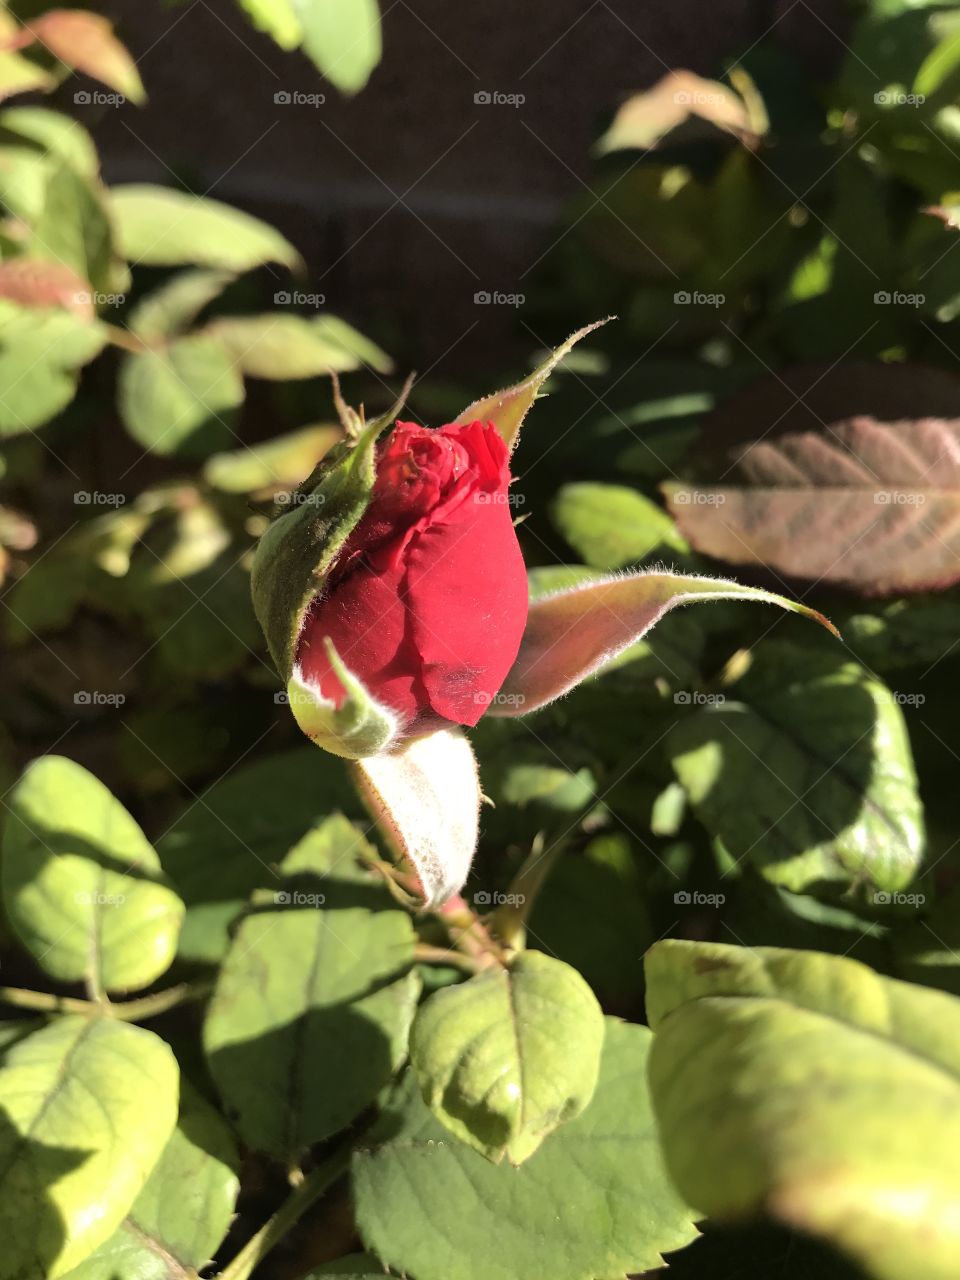 My 1st rose of Spring!